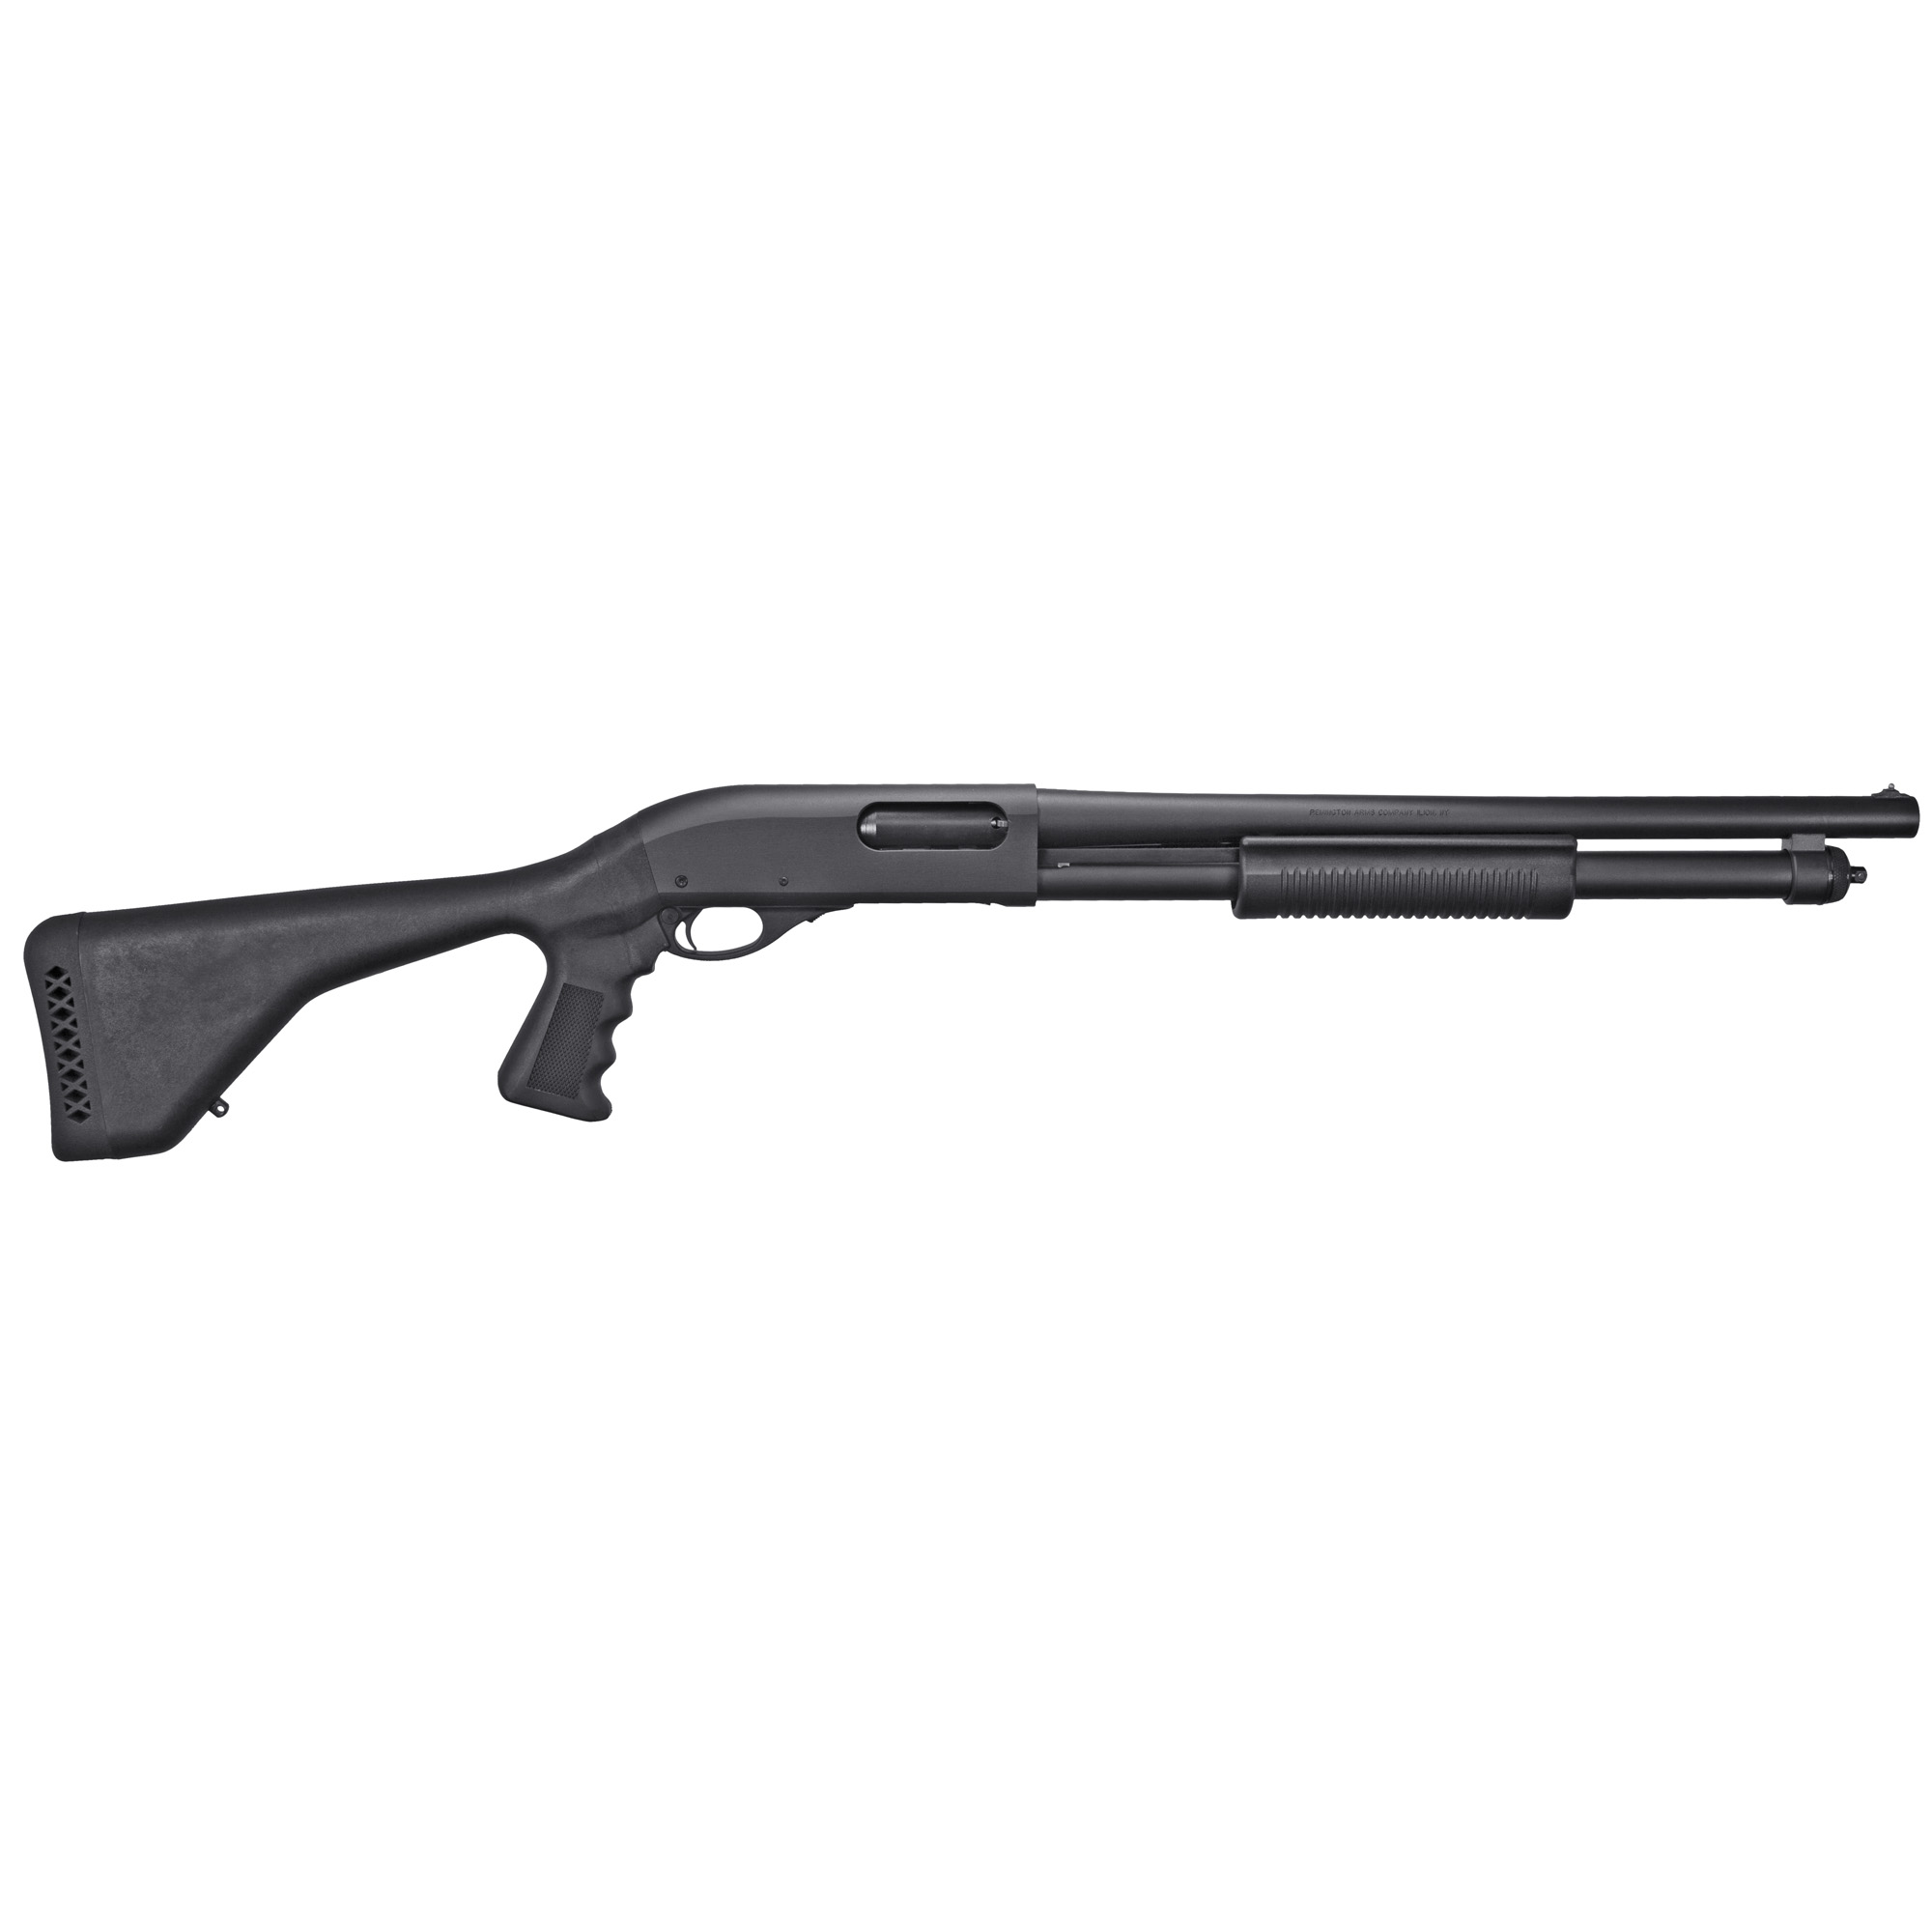 Remington 870 Tactical Shotgun,12ga, Pistol Grip Stock (R81205)